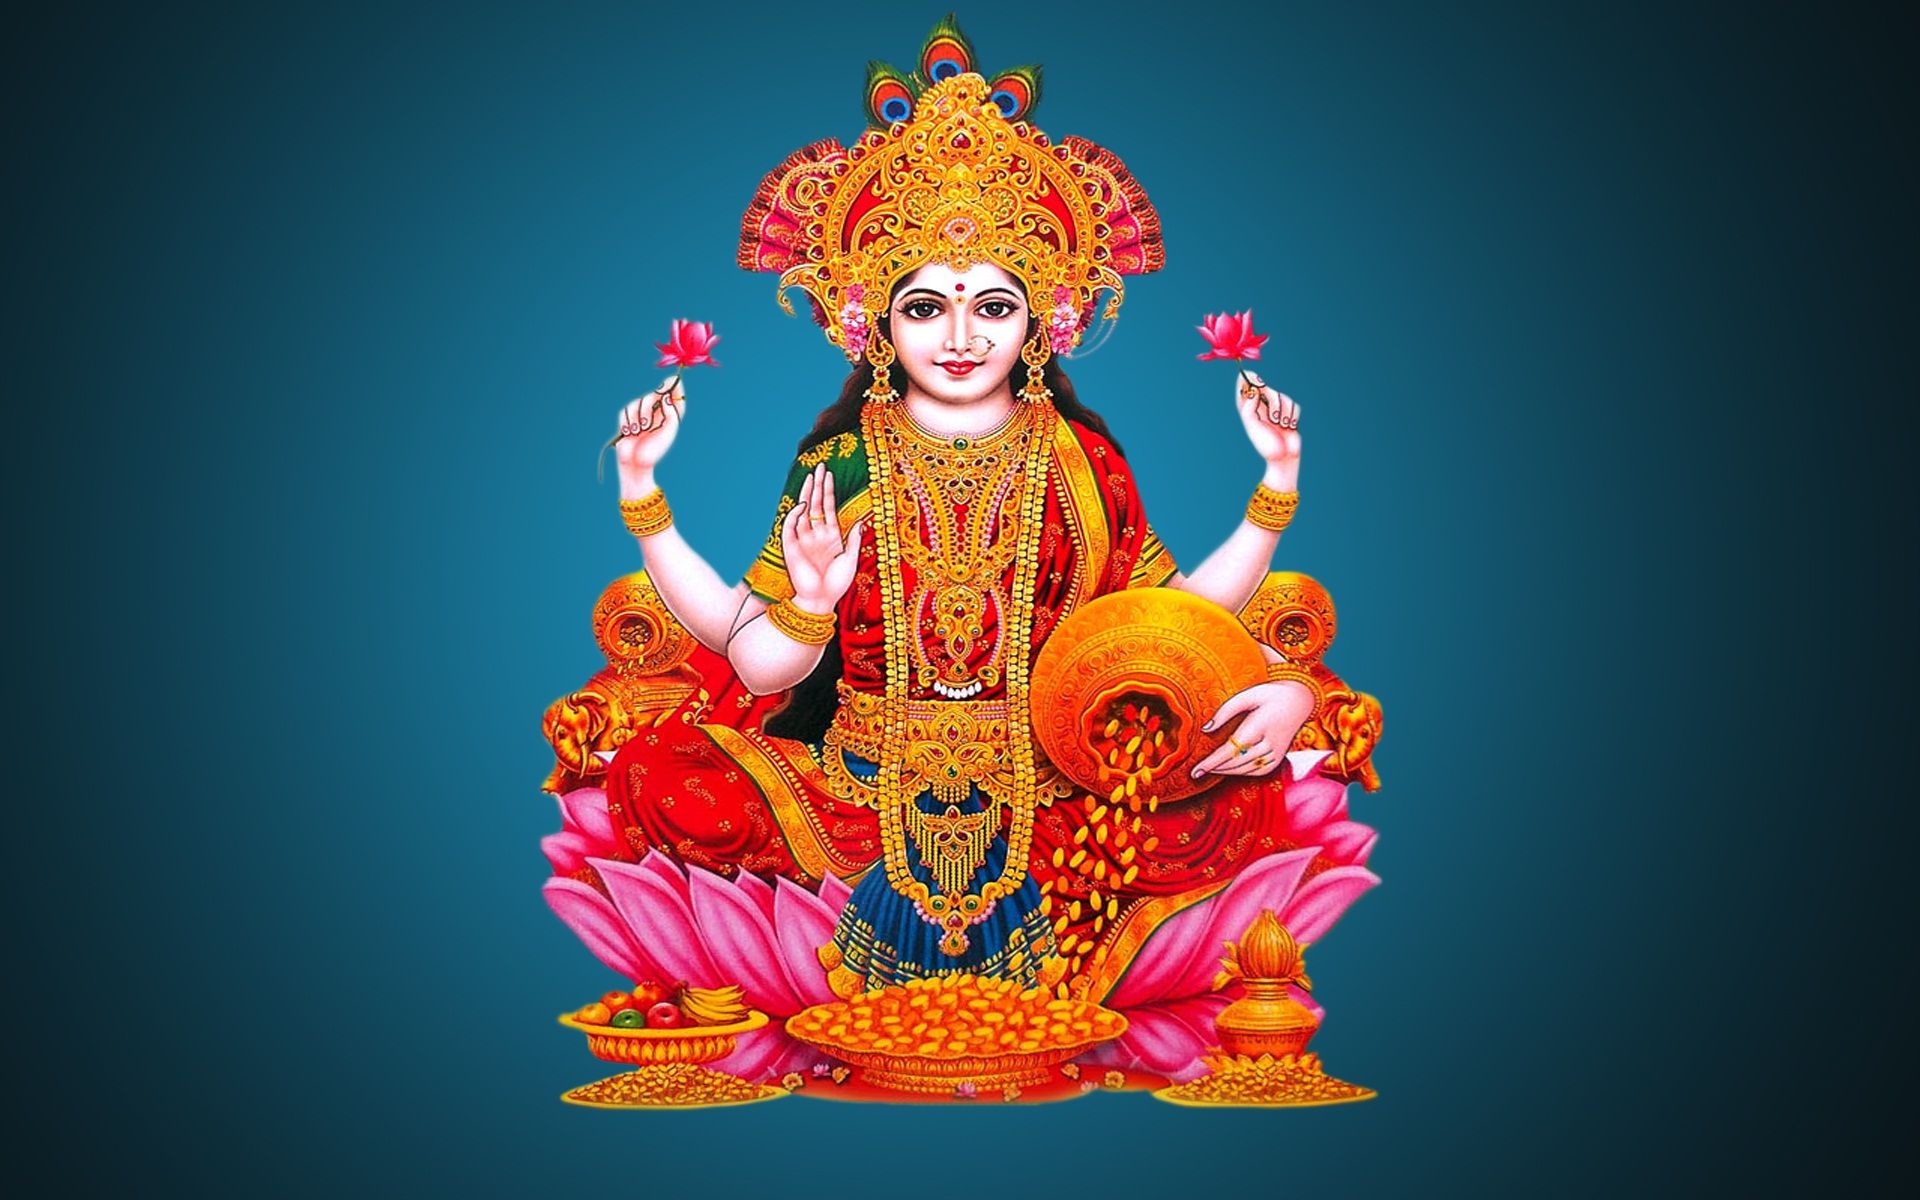 goddess lakshmi image free download لم يسبق له مثيل الصور + tier3.xyz